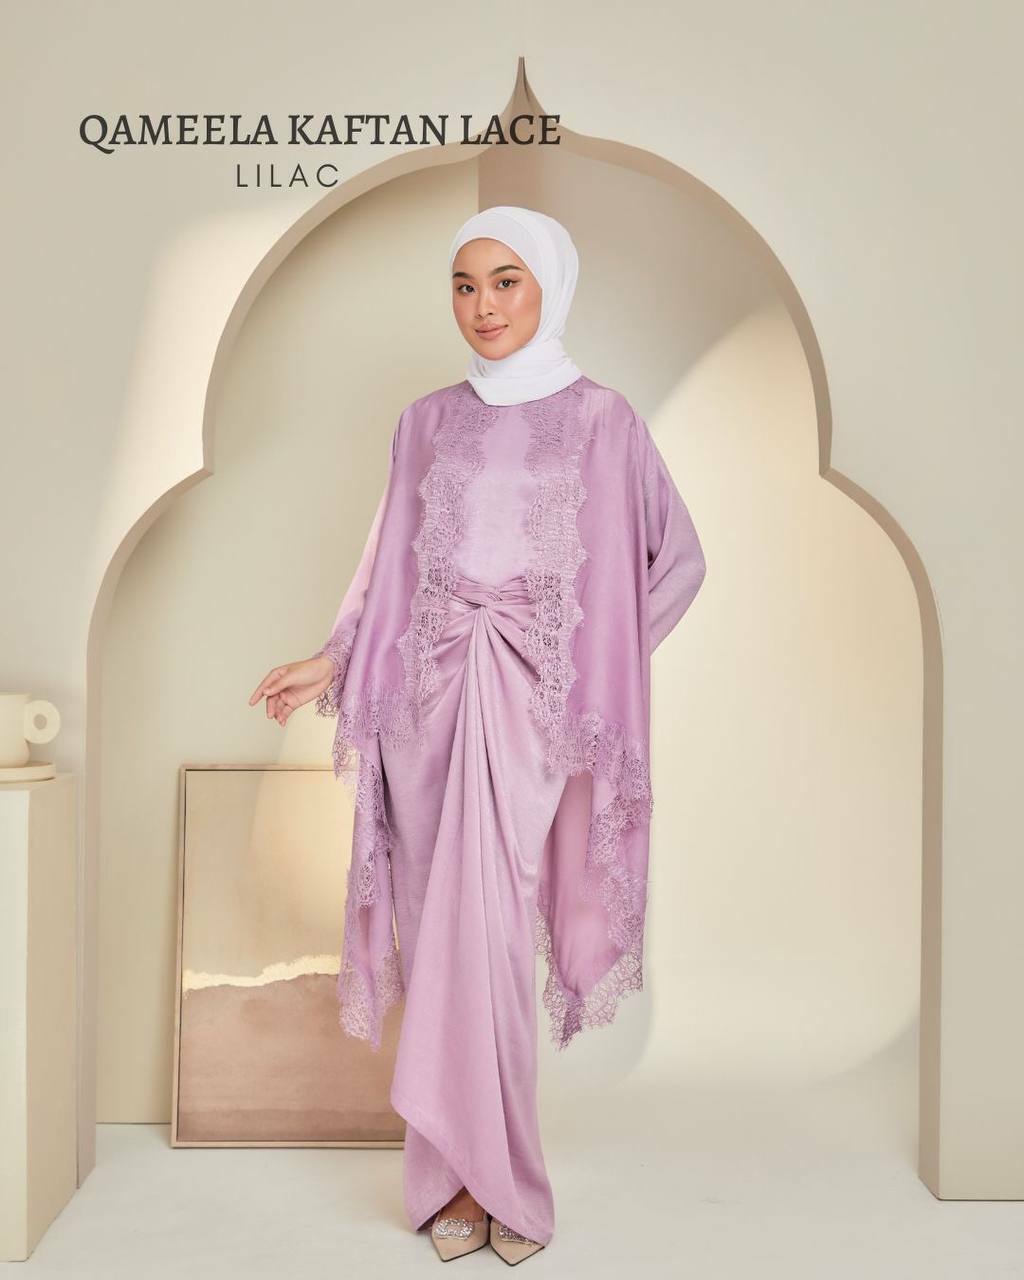 haura-wear-qameela-kurung-kebaya-sulam-embroidery-pario-klasik-tradisional-mini kebaya-fabrik eyelet-raya-muslimah-long-sleeve-baju-skirt-kain-perempuan-baju-sepasang (11)